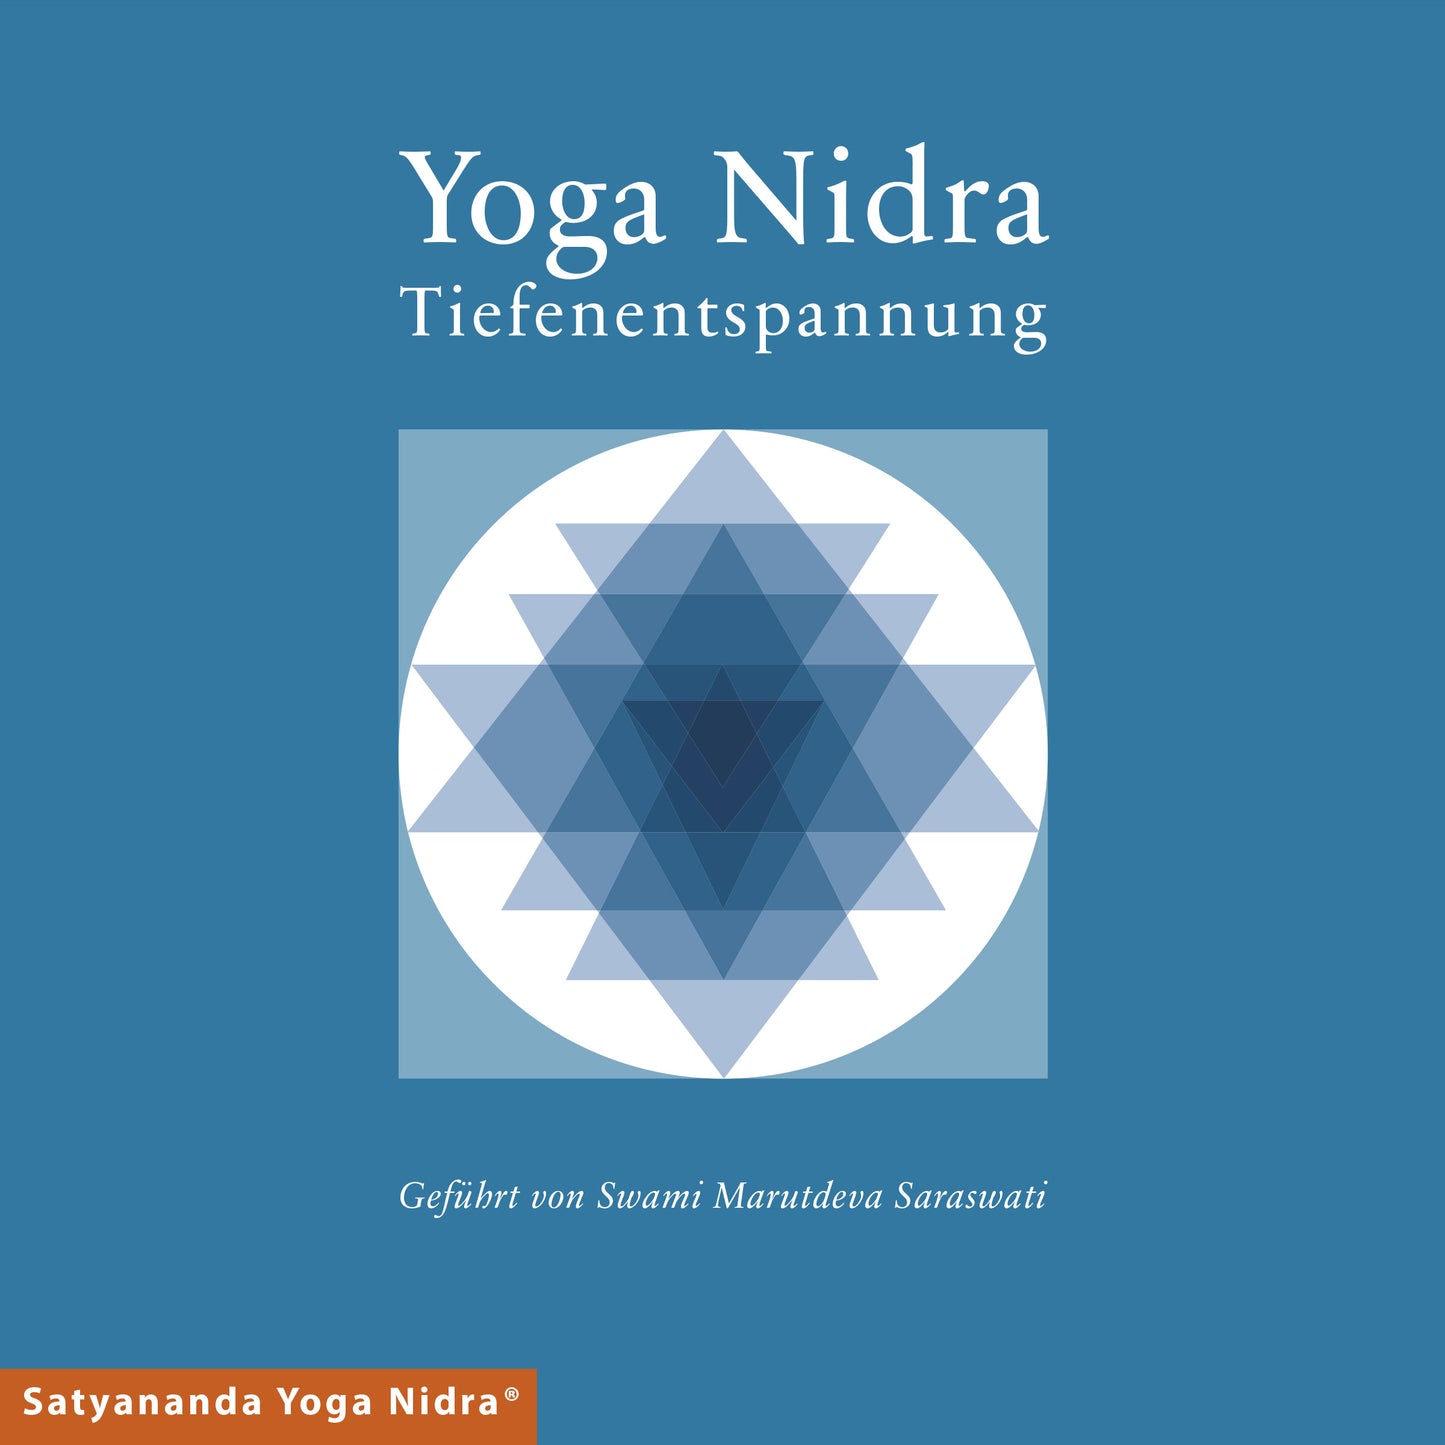 Yoga CD Cover – Yoga Nidra - Tiefenentspannung – Gesprochen von Swami Marutdeva Saraswati